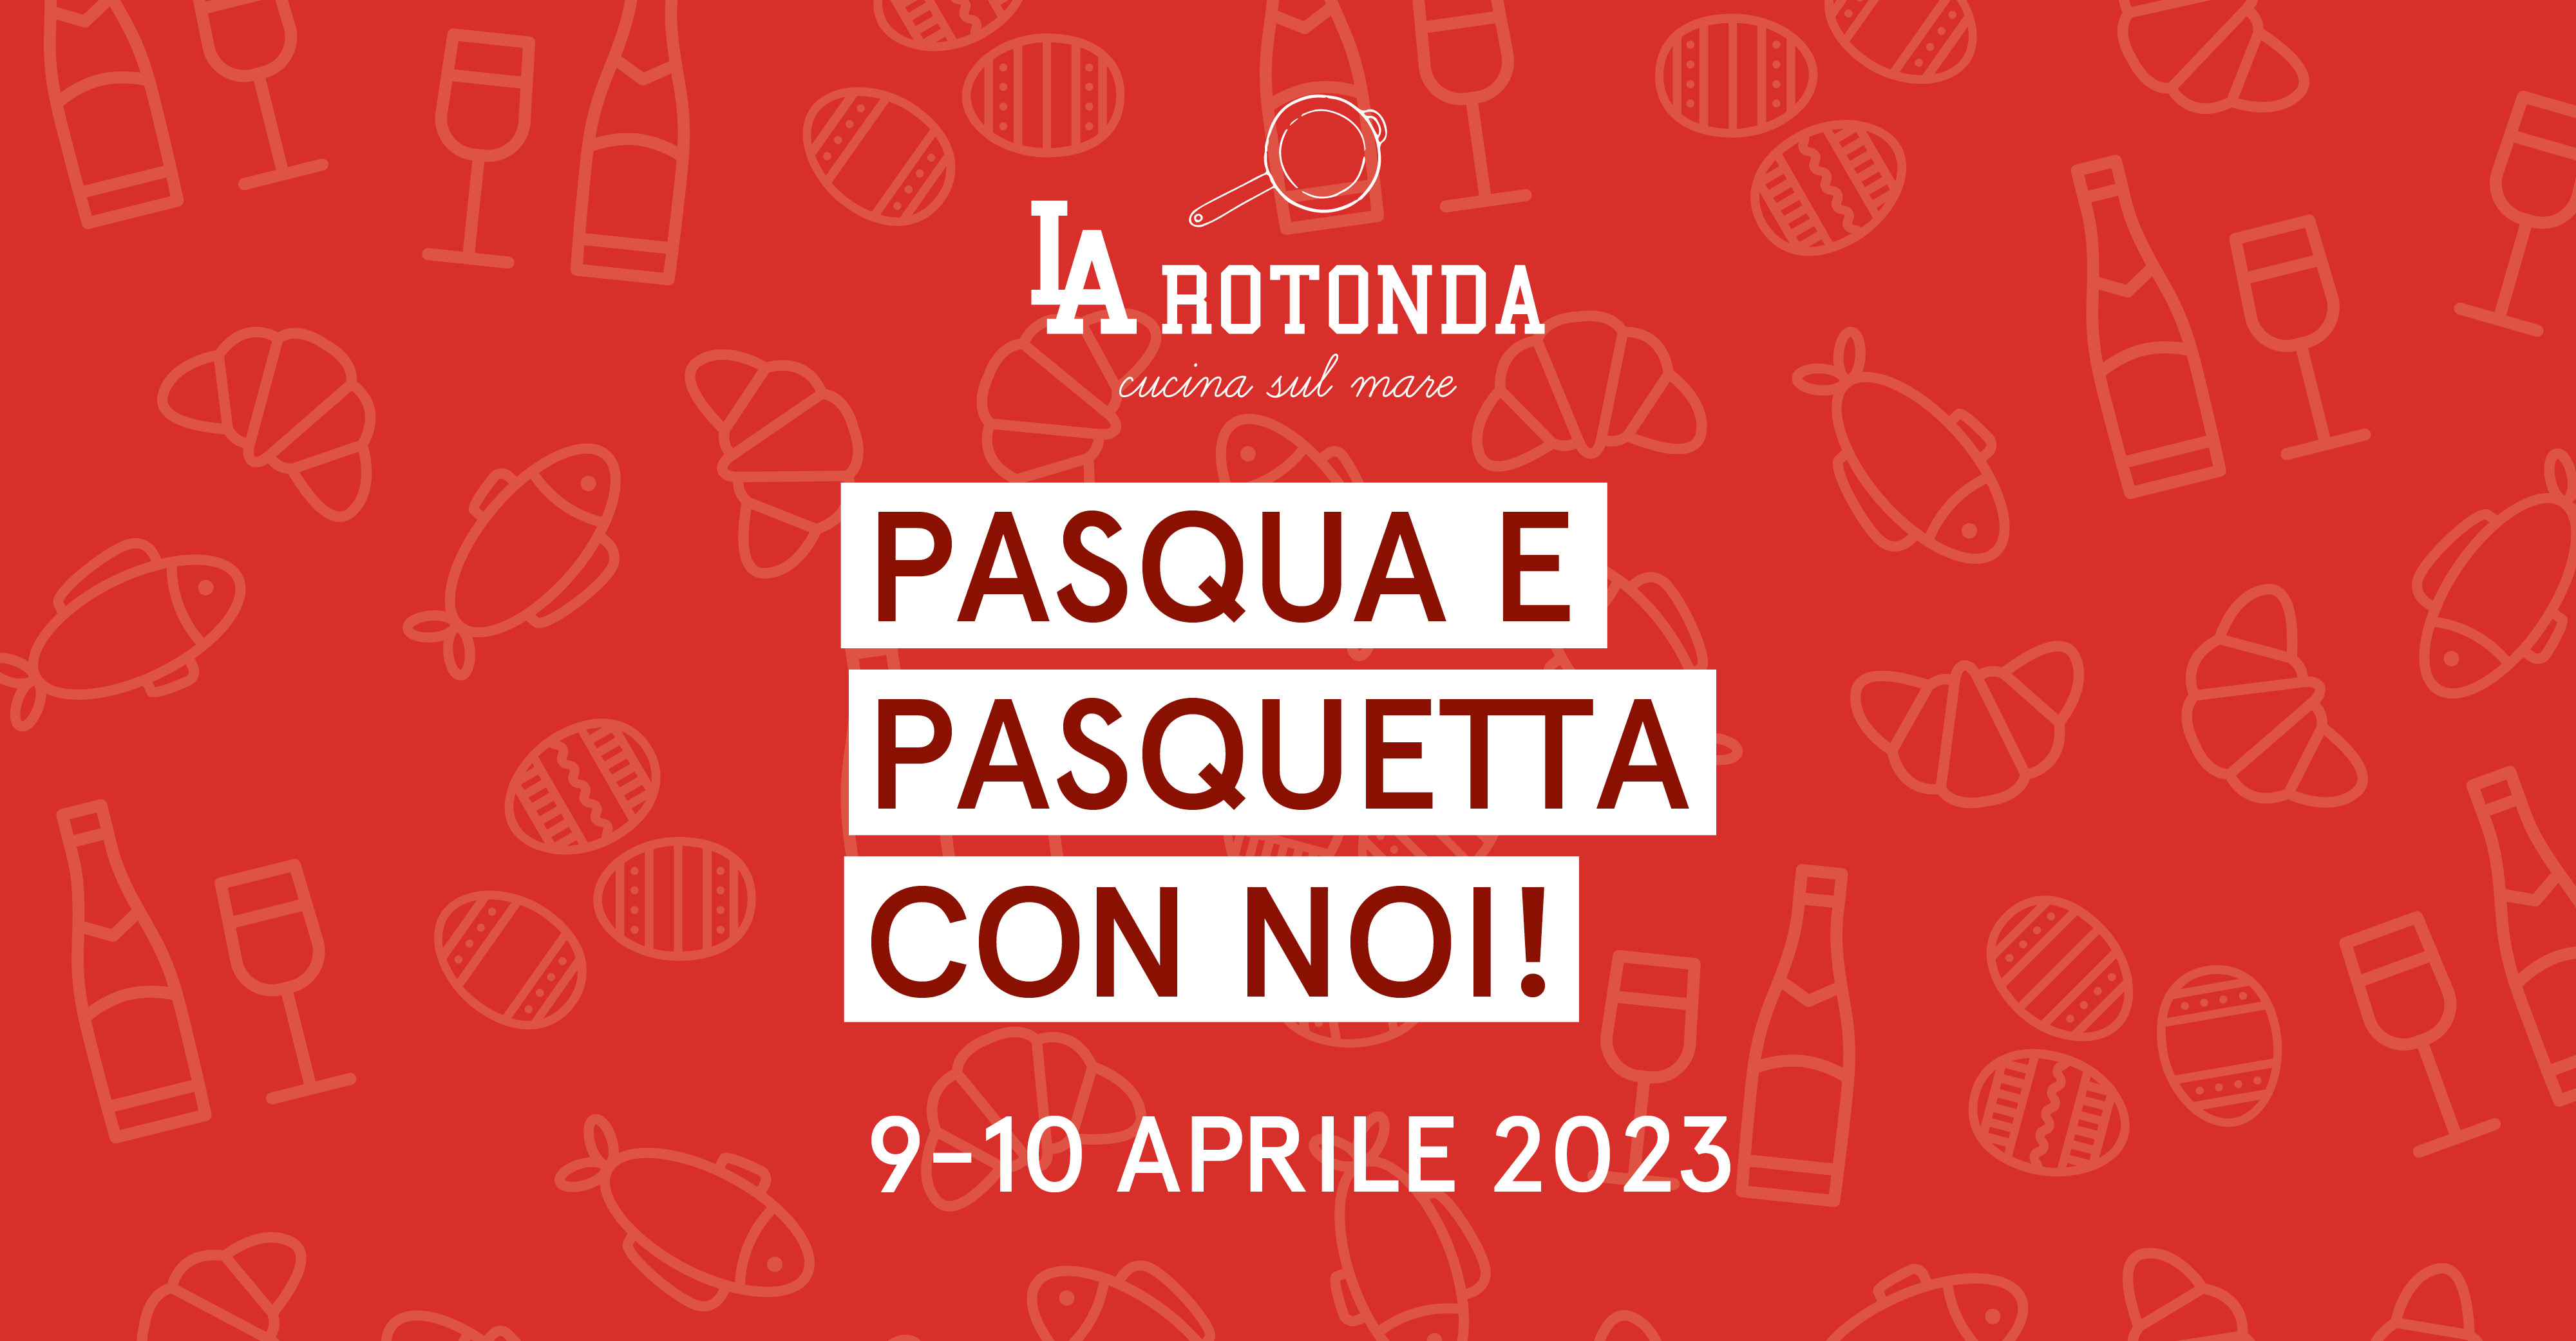 larotonda_social_2023-evento-pasqua